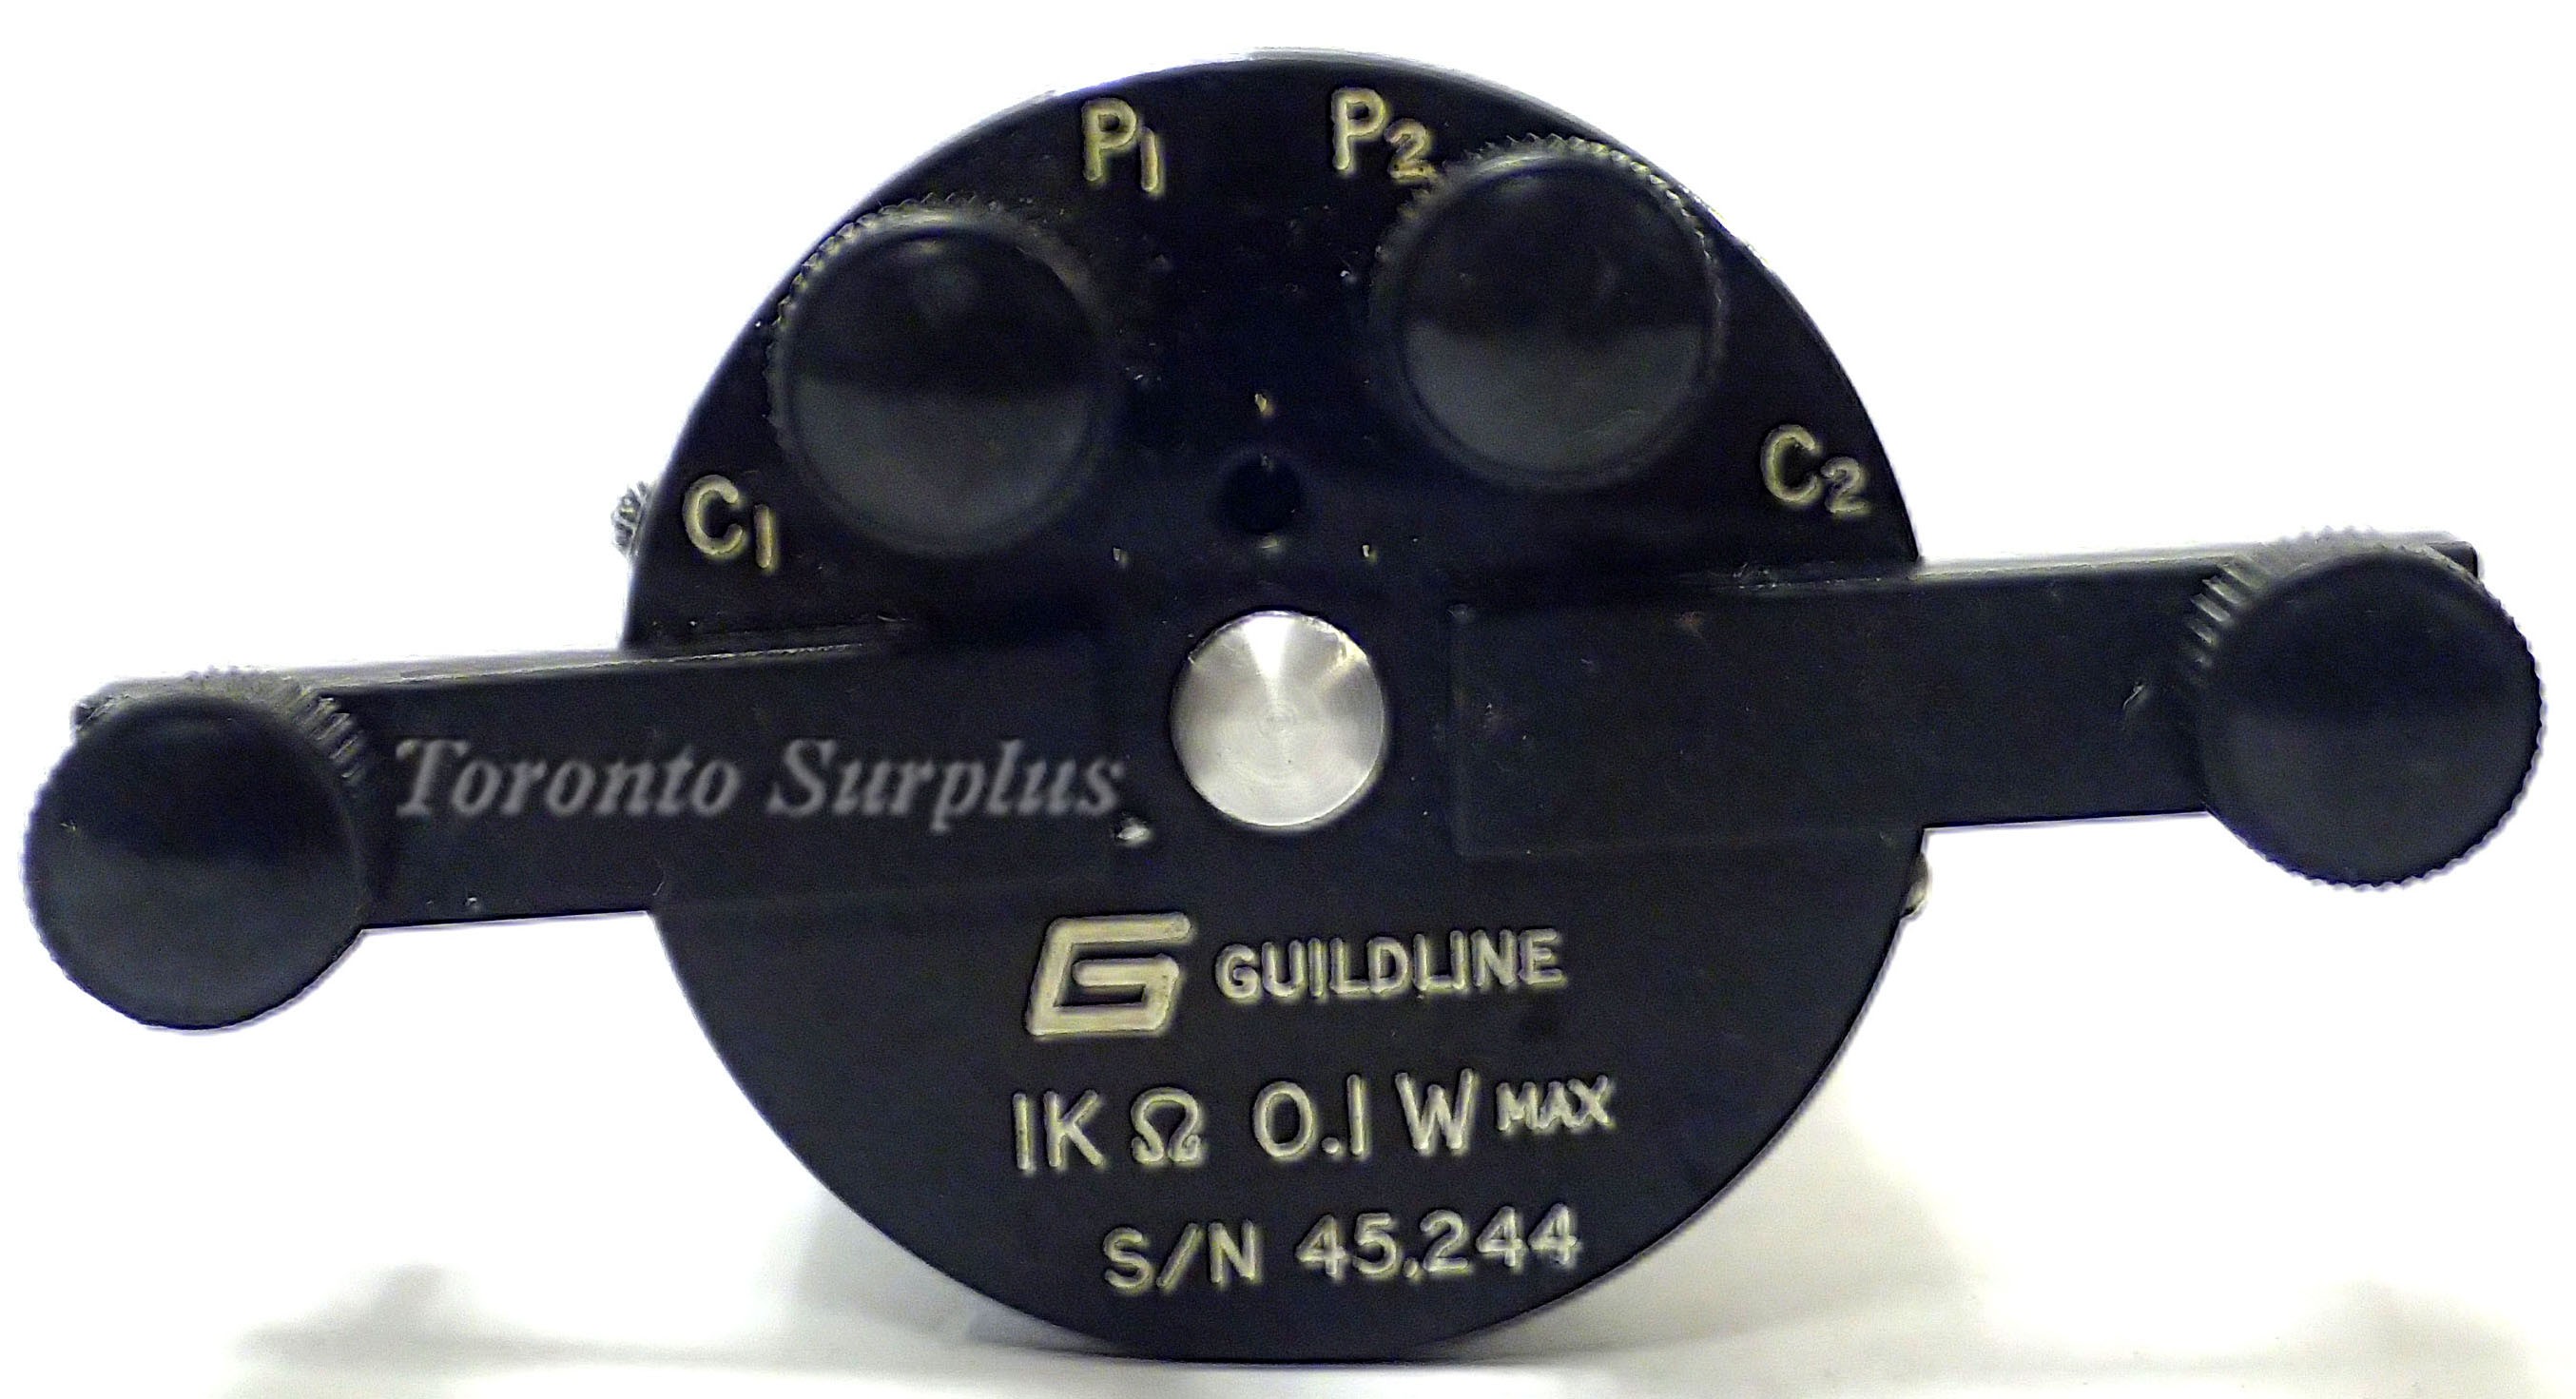 Guildline 9330-1k / 9330 Series Resistor / Resistance Standard 1 kohm, 0.1 W max